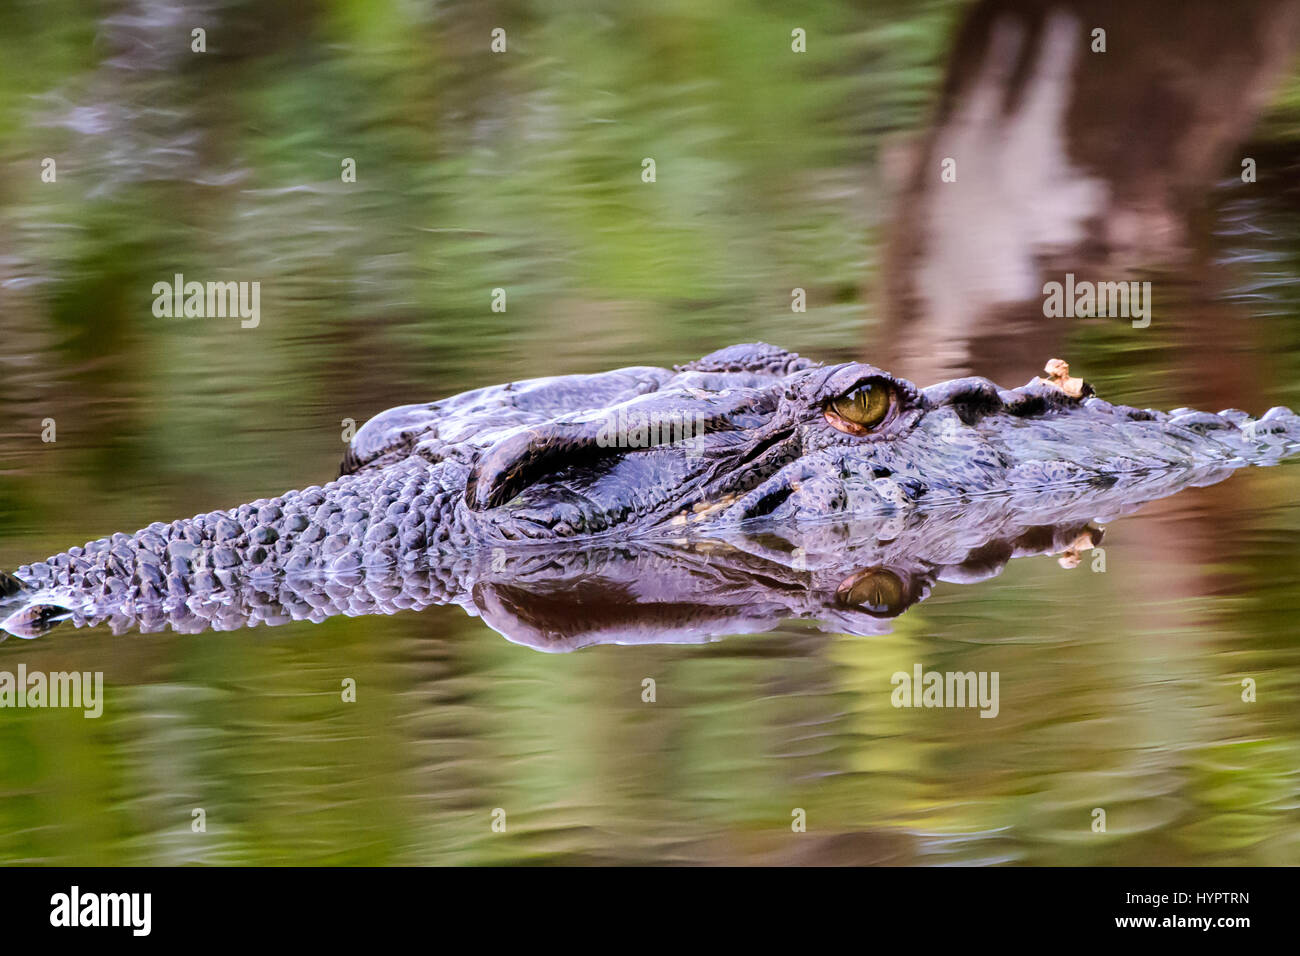 Head shot of a saltwater crocodile Stock Photo